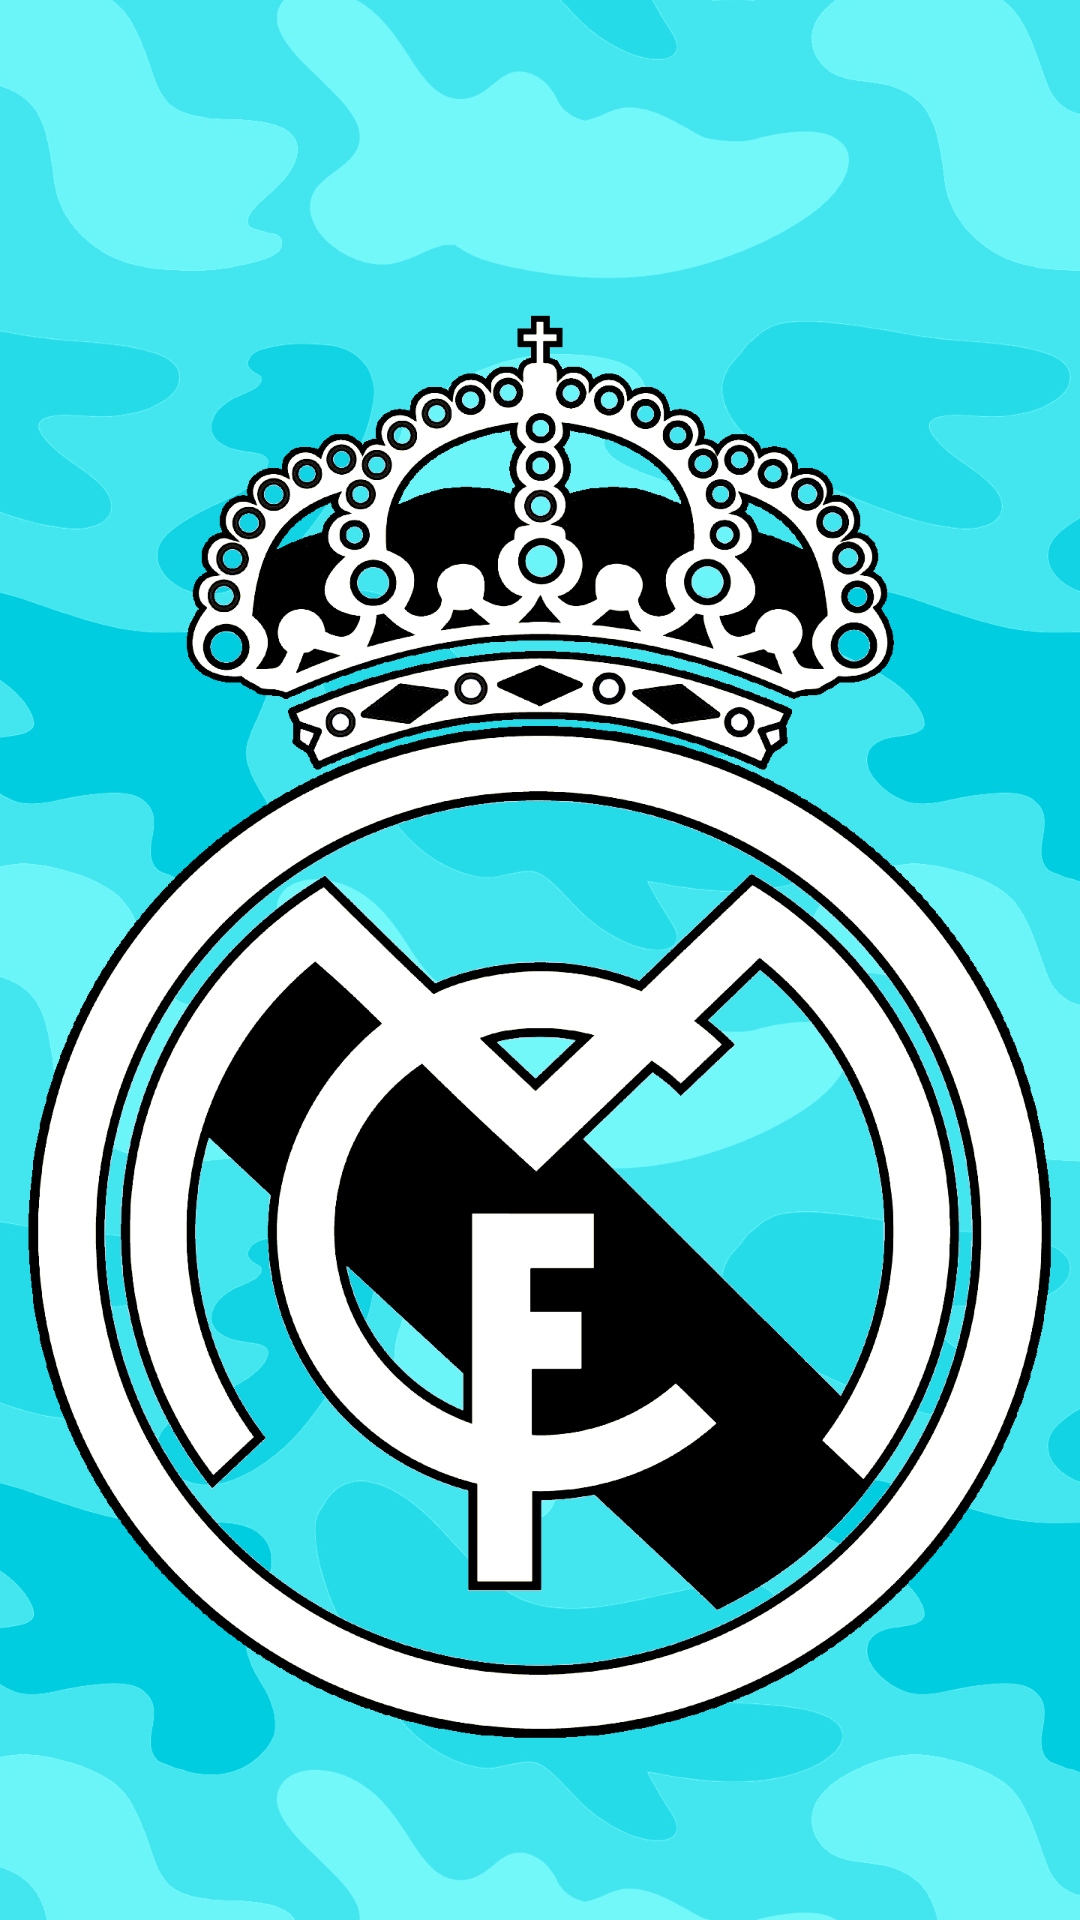 Real Madrid Logo Wallpaper Images